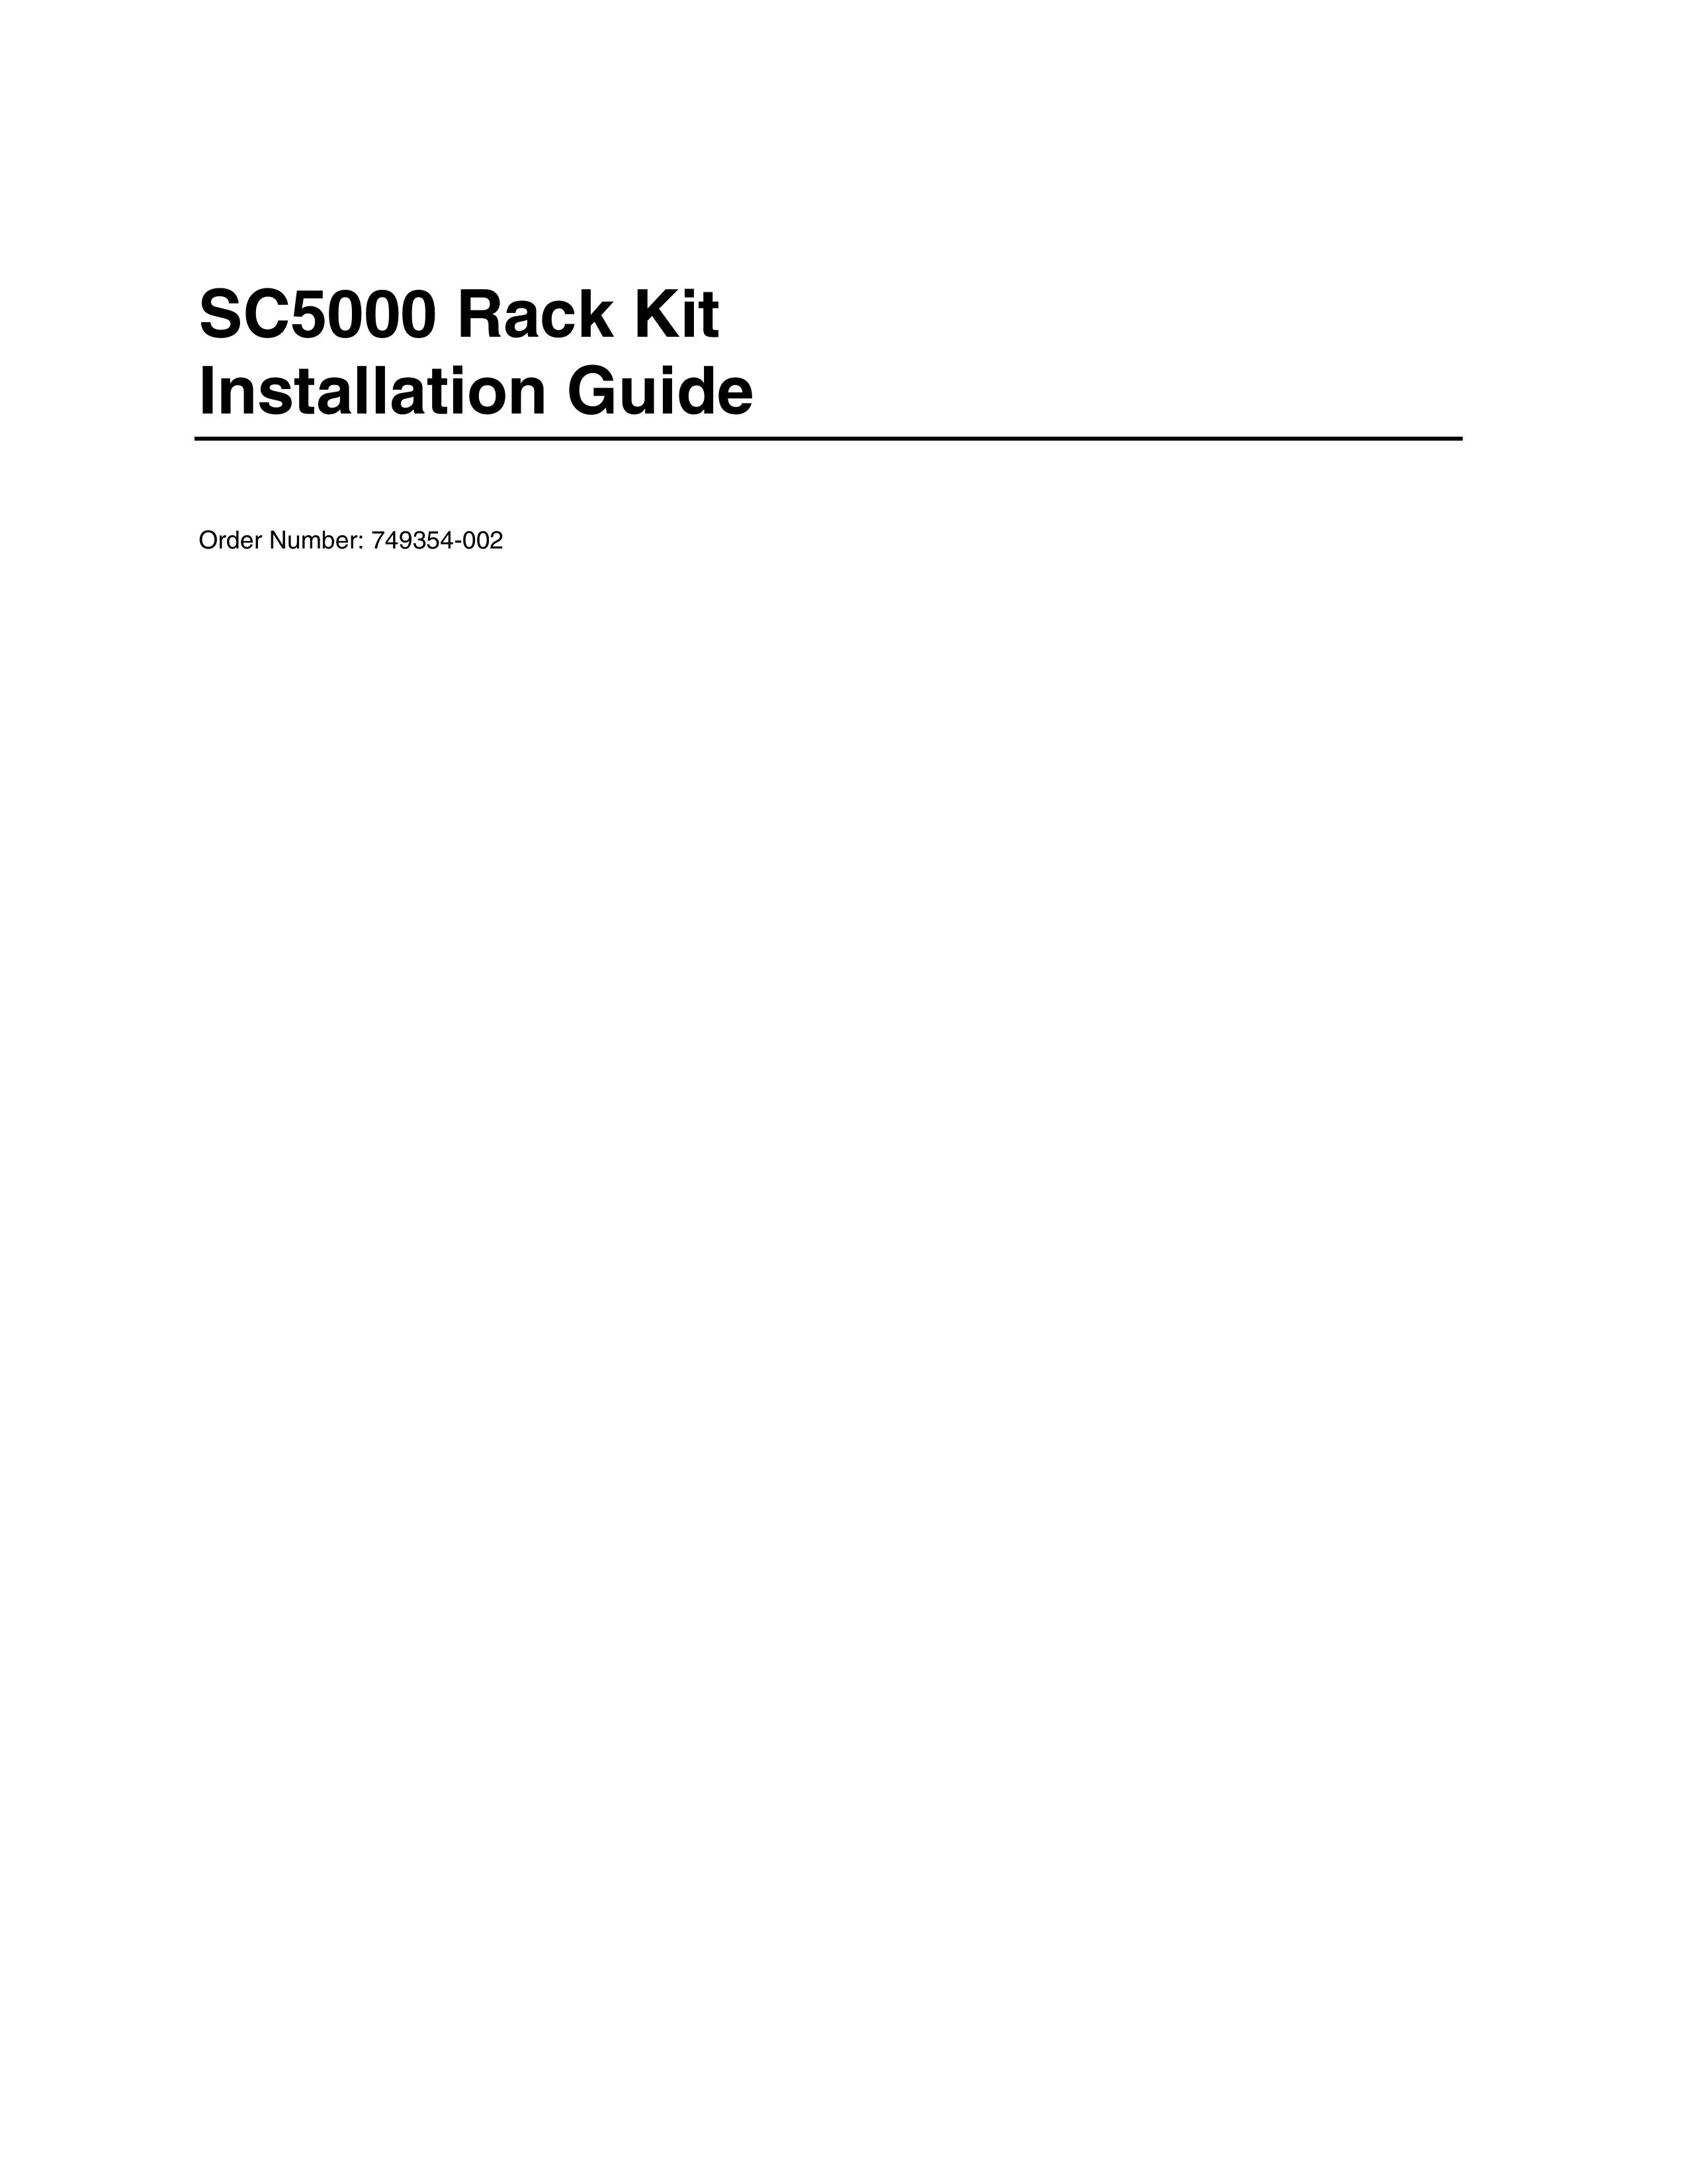 Intel SC5000 Recording Equipment User Manual